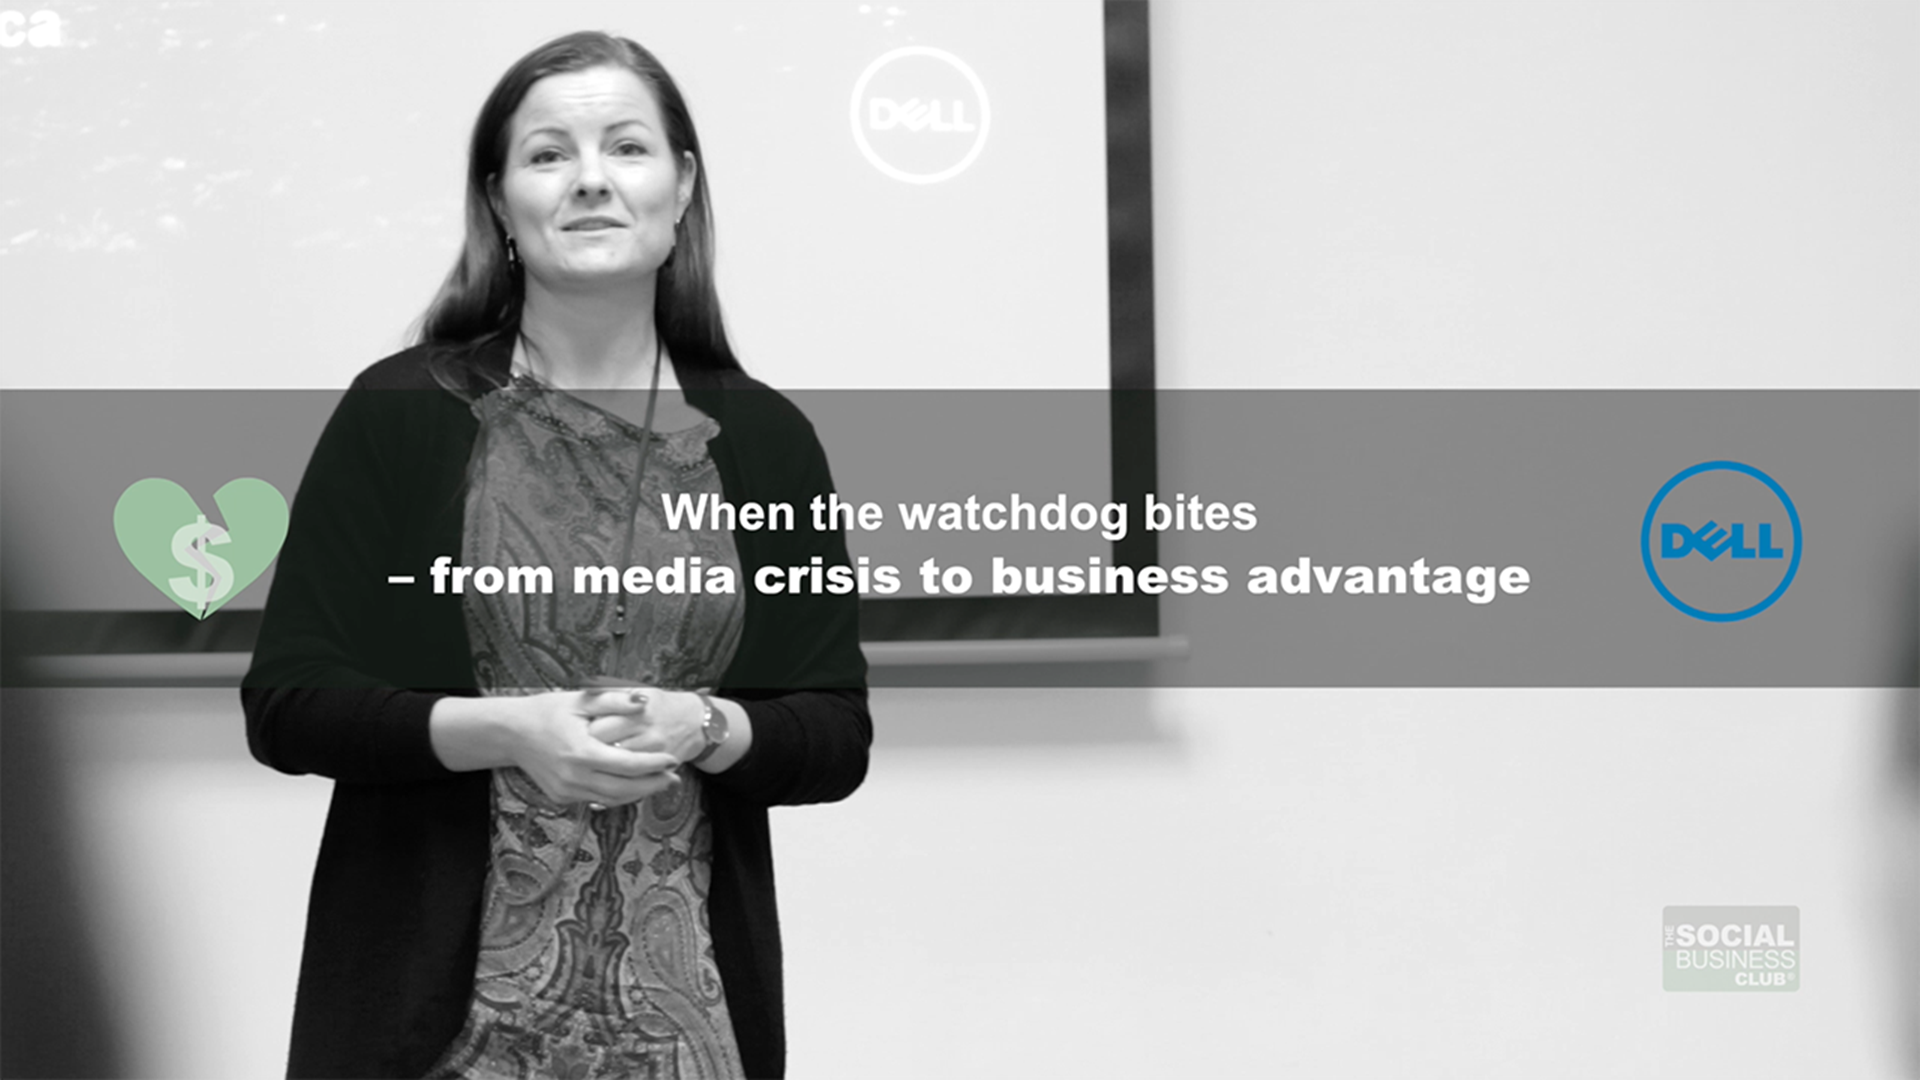 Video presentation by Louise Koch (Dell)